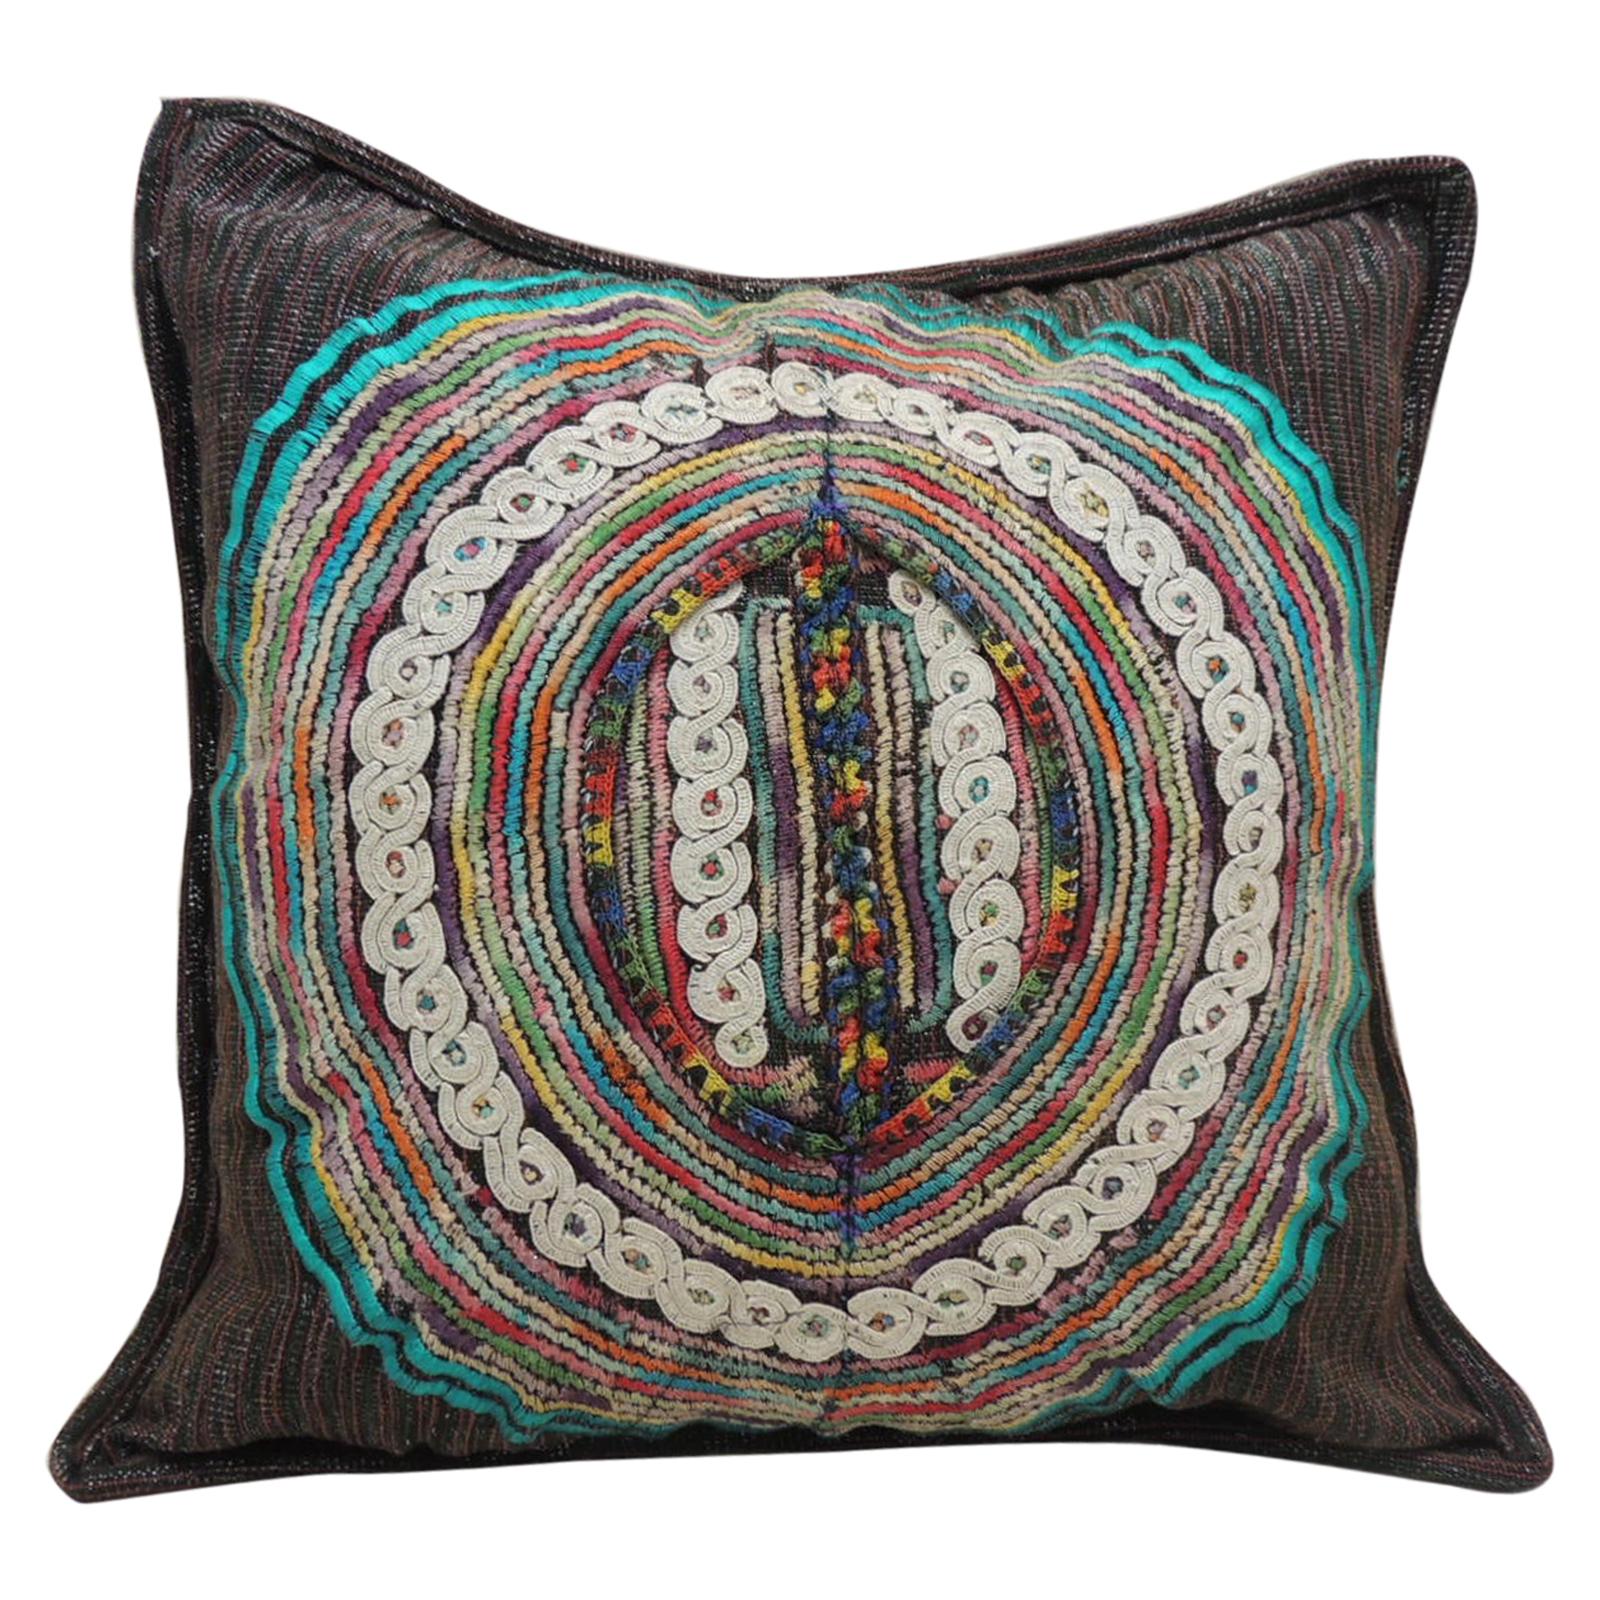 Large Black and Aqua Guatemalan Embroidered Square Decorative Pillow